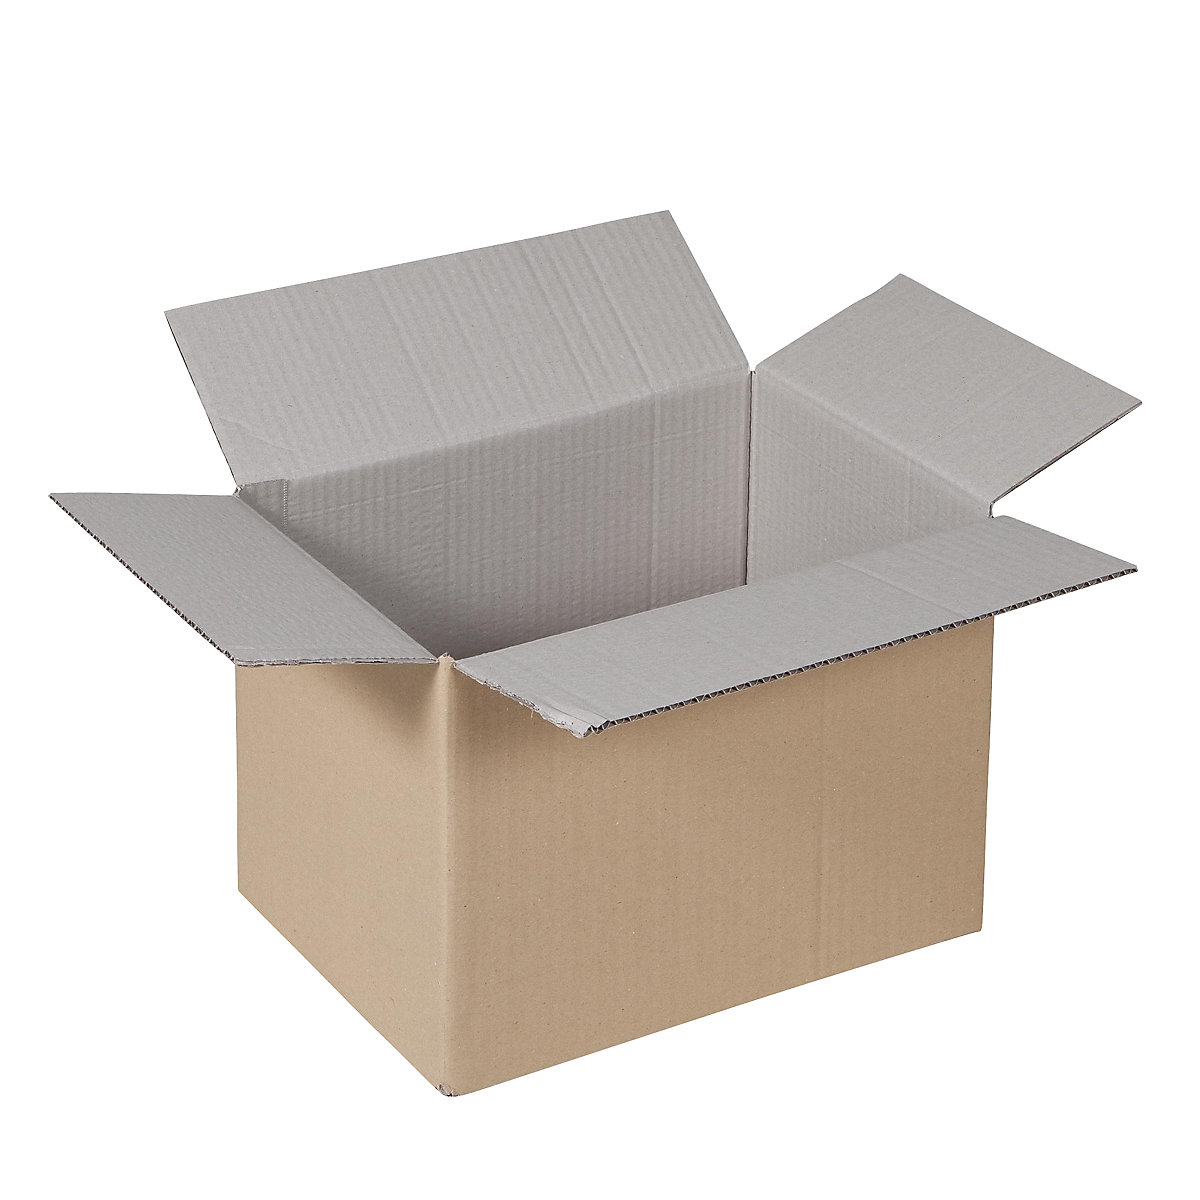 Folding cardboard box, FEFCO 0201, made of single fluted cardboard, internal dimensions 320 x 250 x 200 mm, pack of 100-5